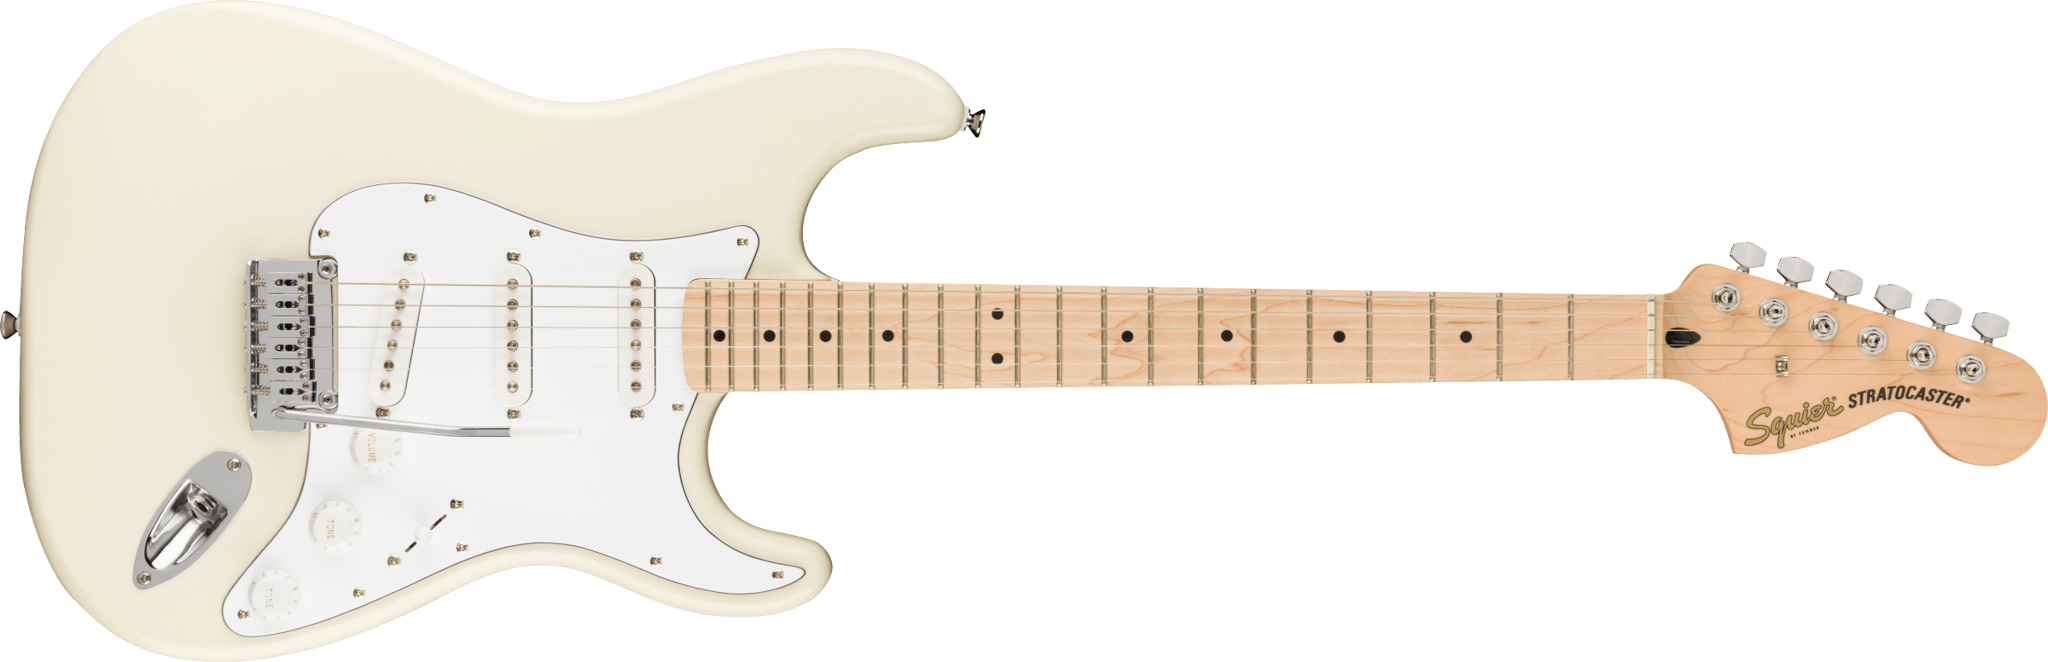 Se Fender Squier Affinity Stratocaster El-guitar (Olympic White) hos Drum City